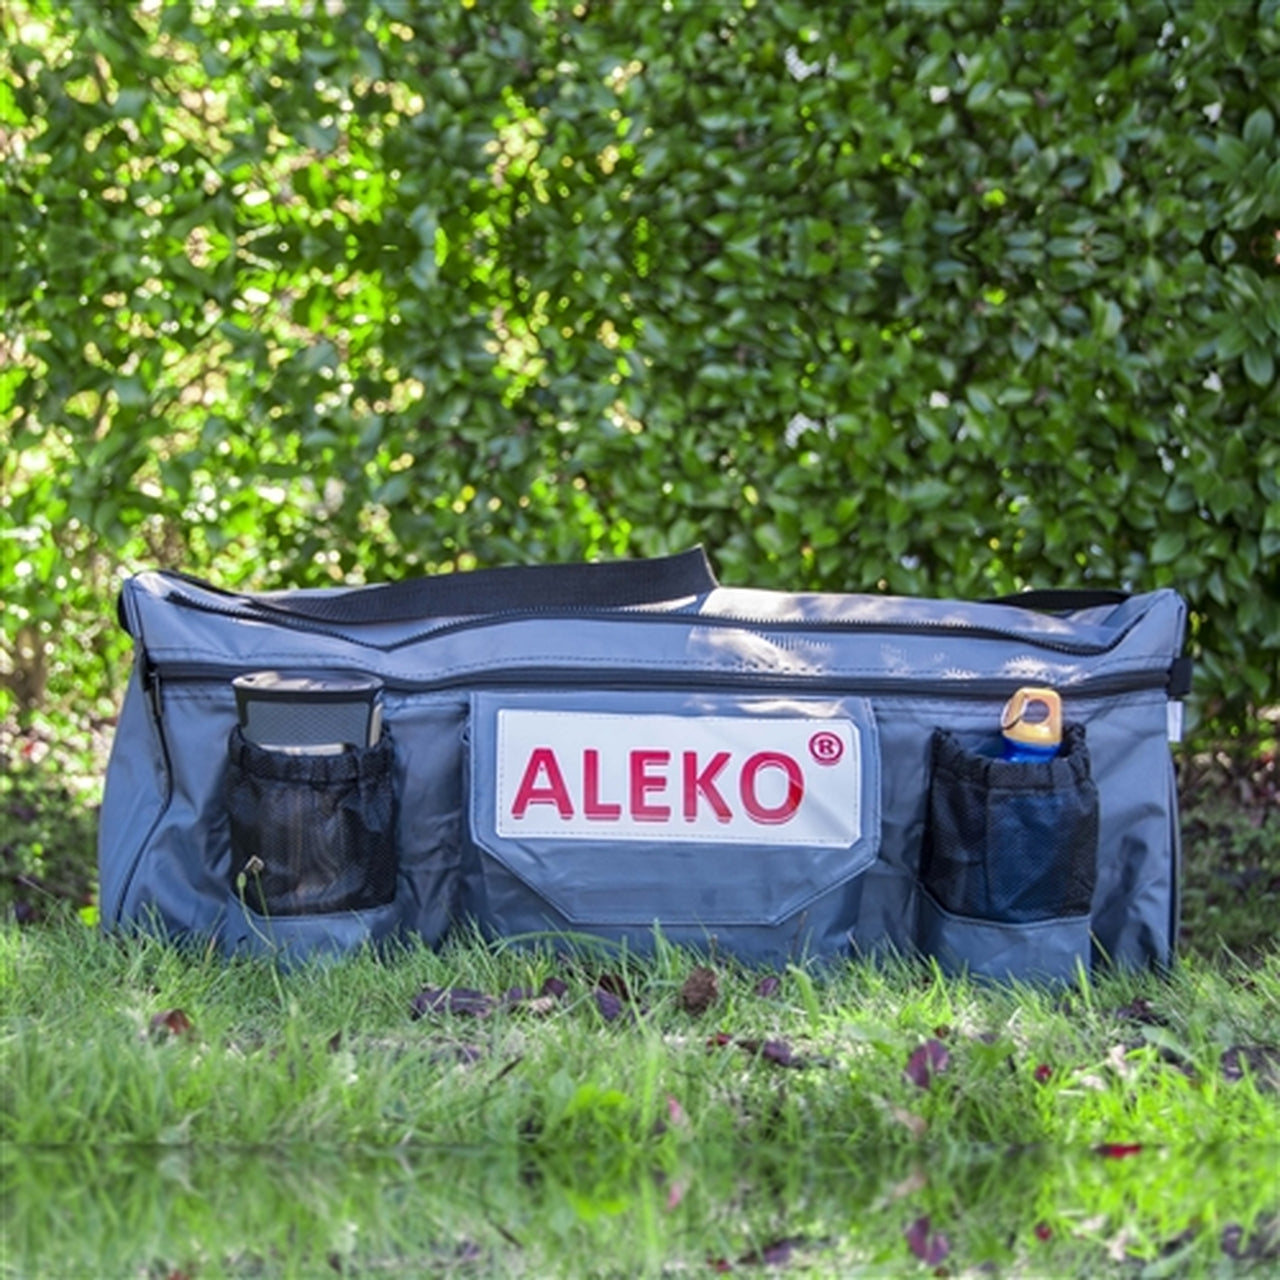 Aleko Boats Waterproof Inflatable Boat Seat Cushion